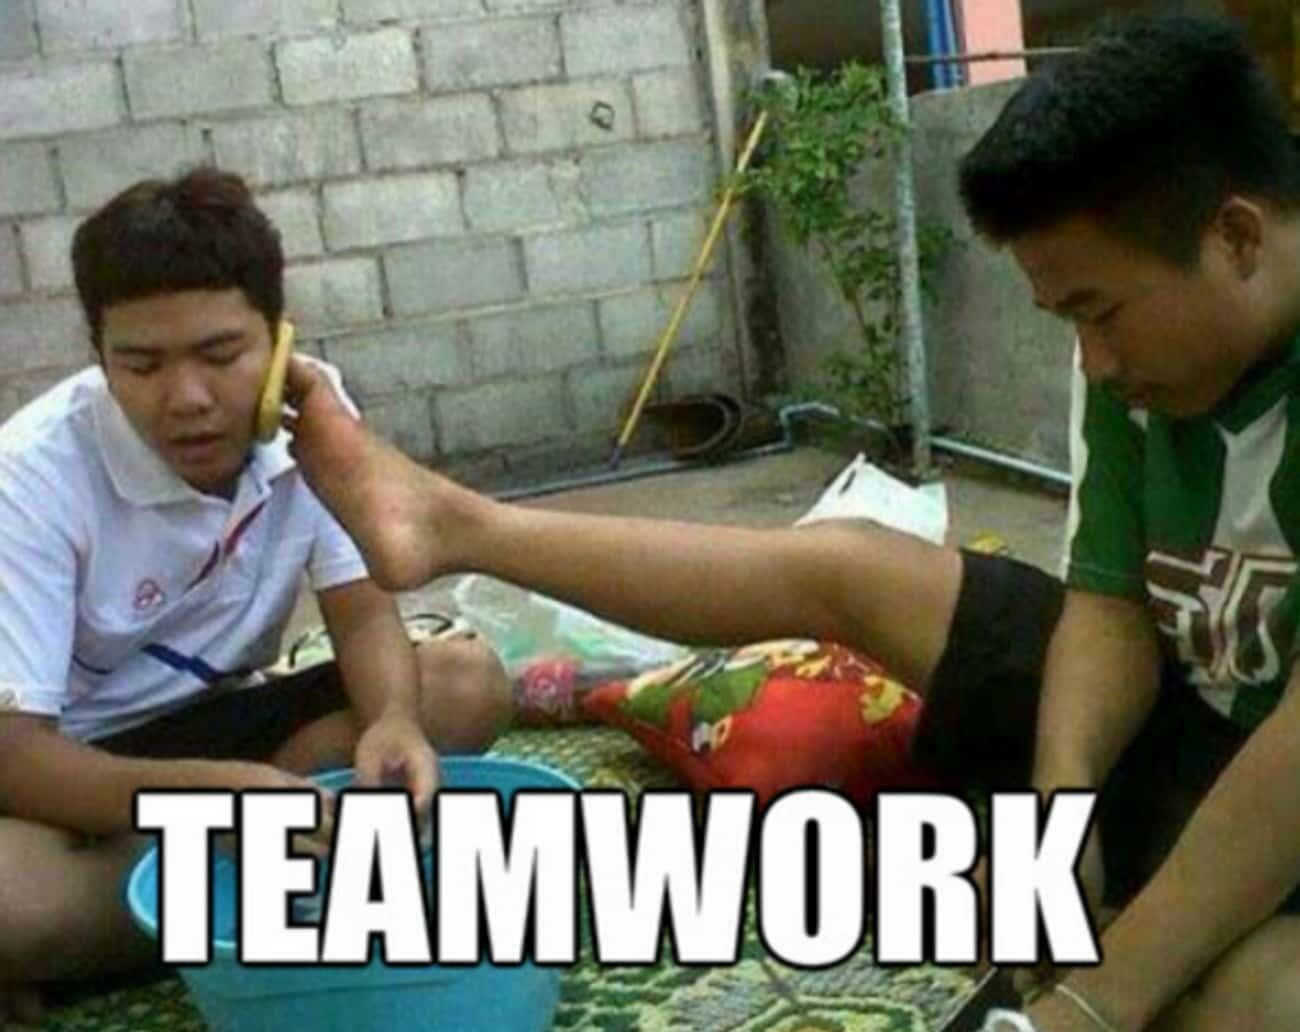 Teamwork meme